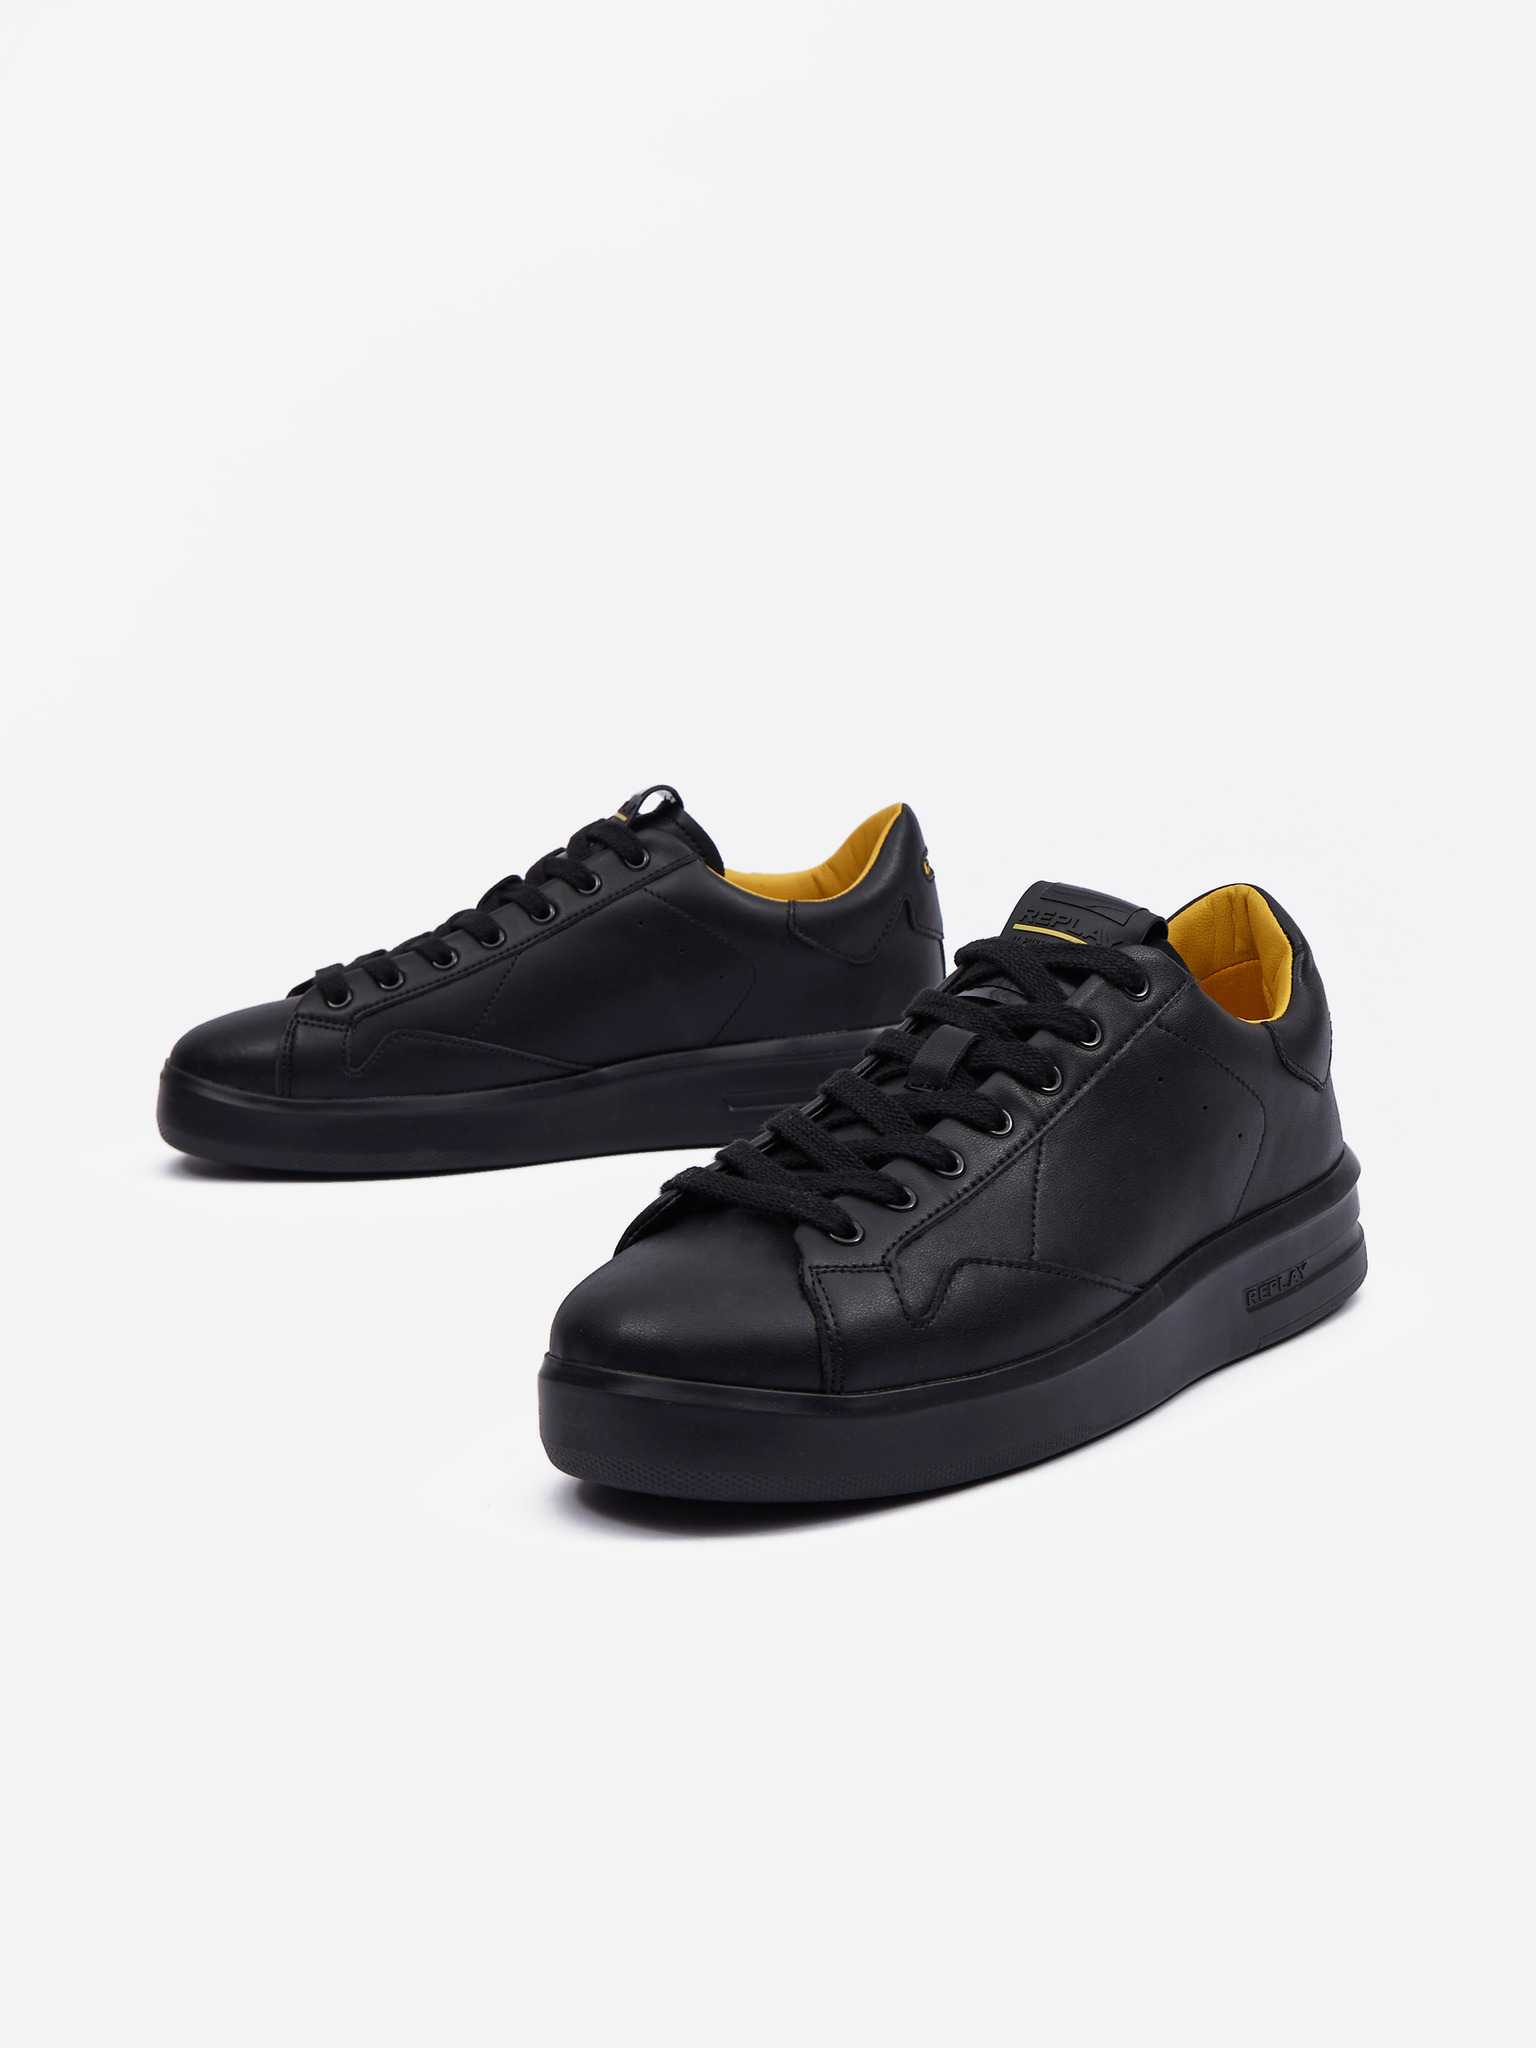  Replay Women's Low-Top Sneakers, Black 003 Black, 10